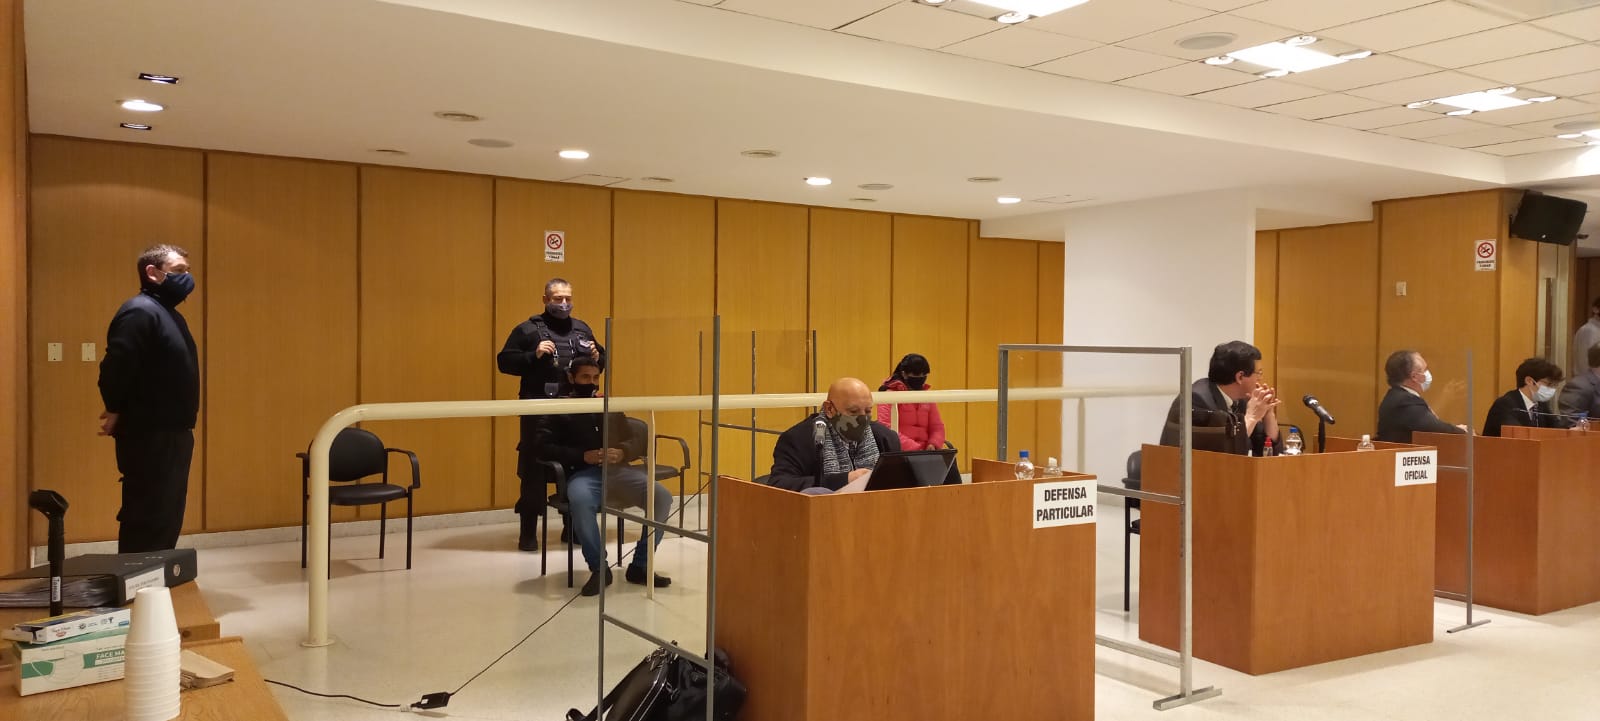 Erbín (al fondo de la sala) brindó su testimonio esta mañana ante el jurado. (foto: gentileza)